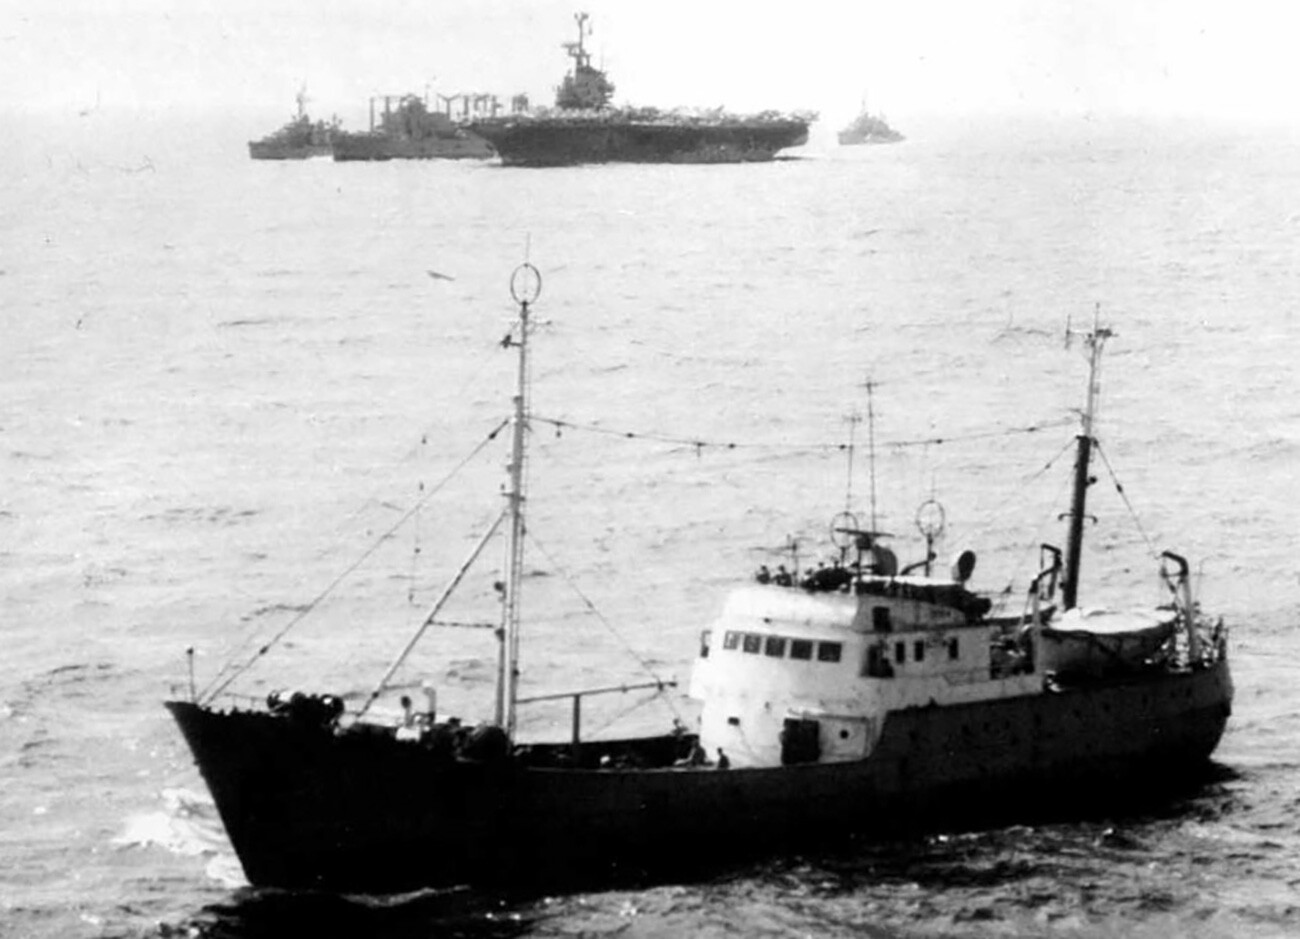 A Soviet spy ship near the U.S. aircraft carrier.